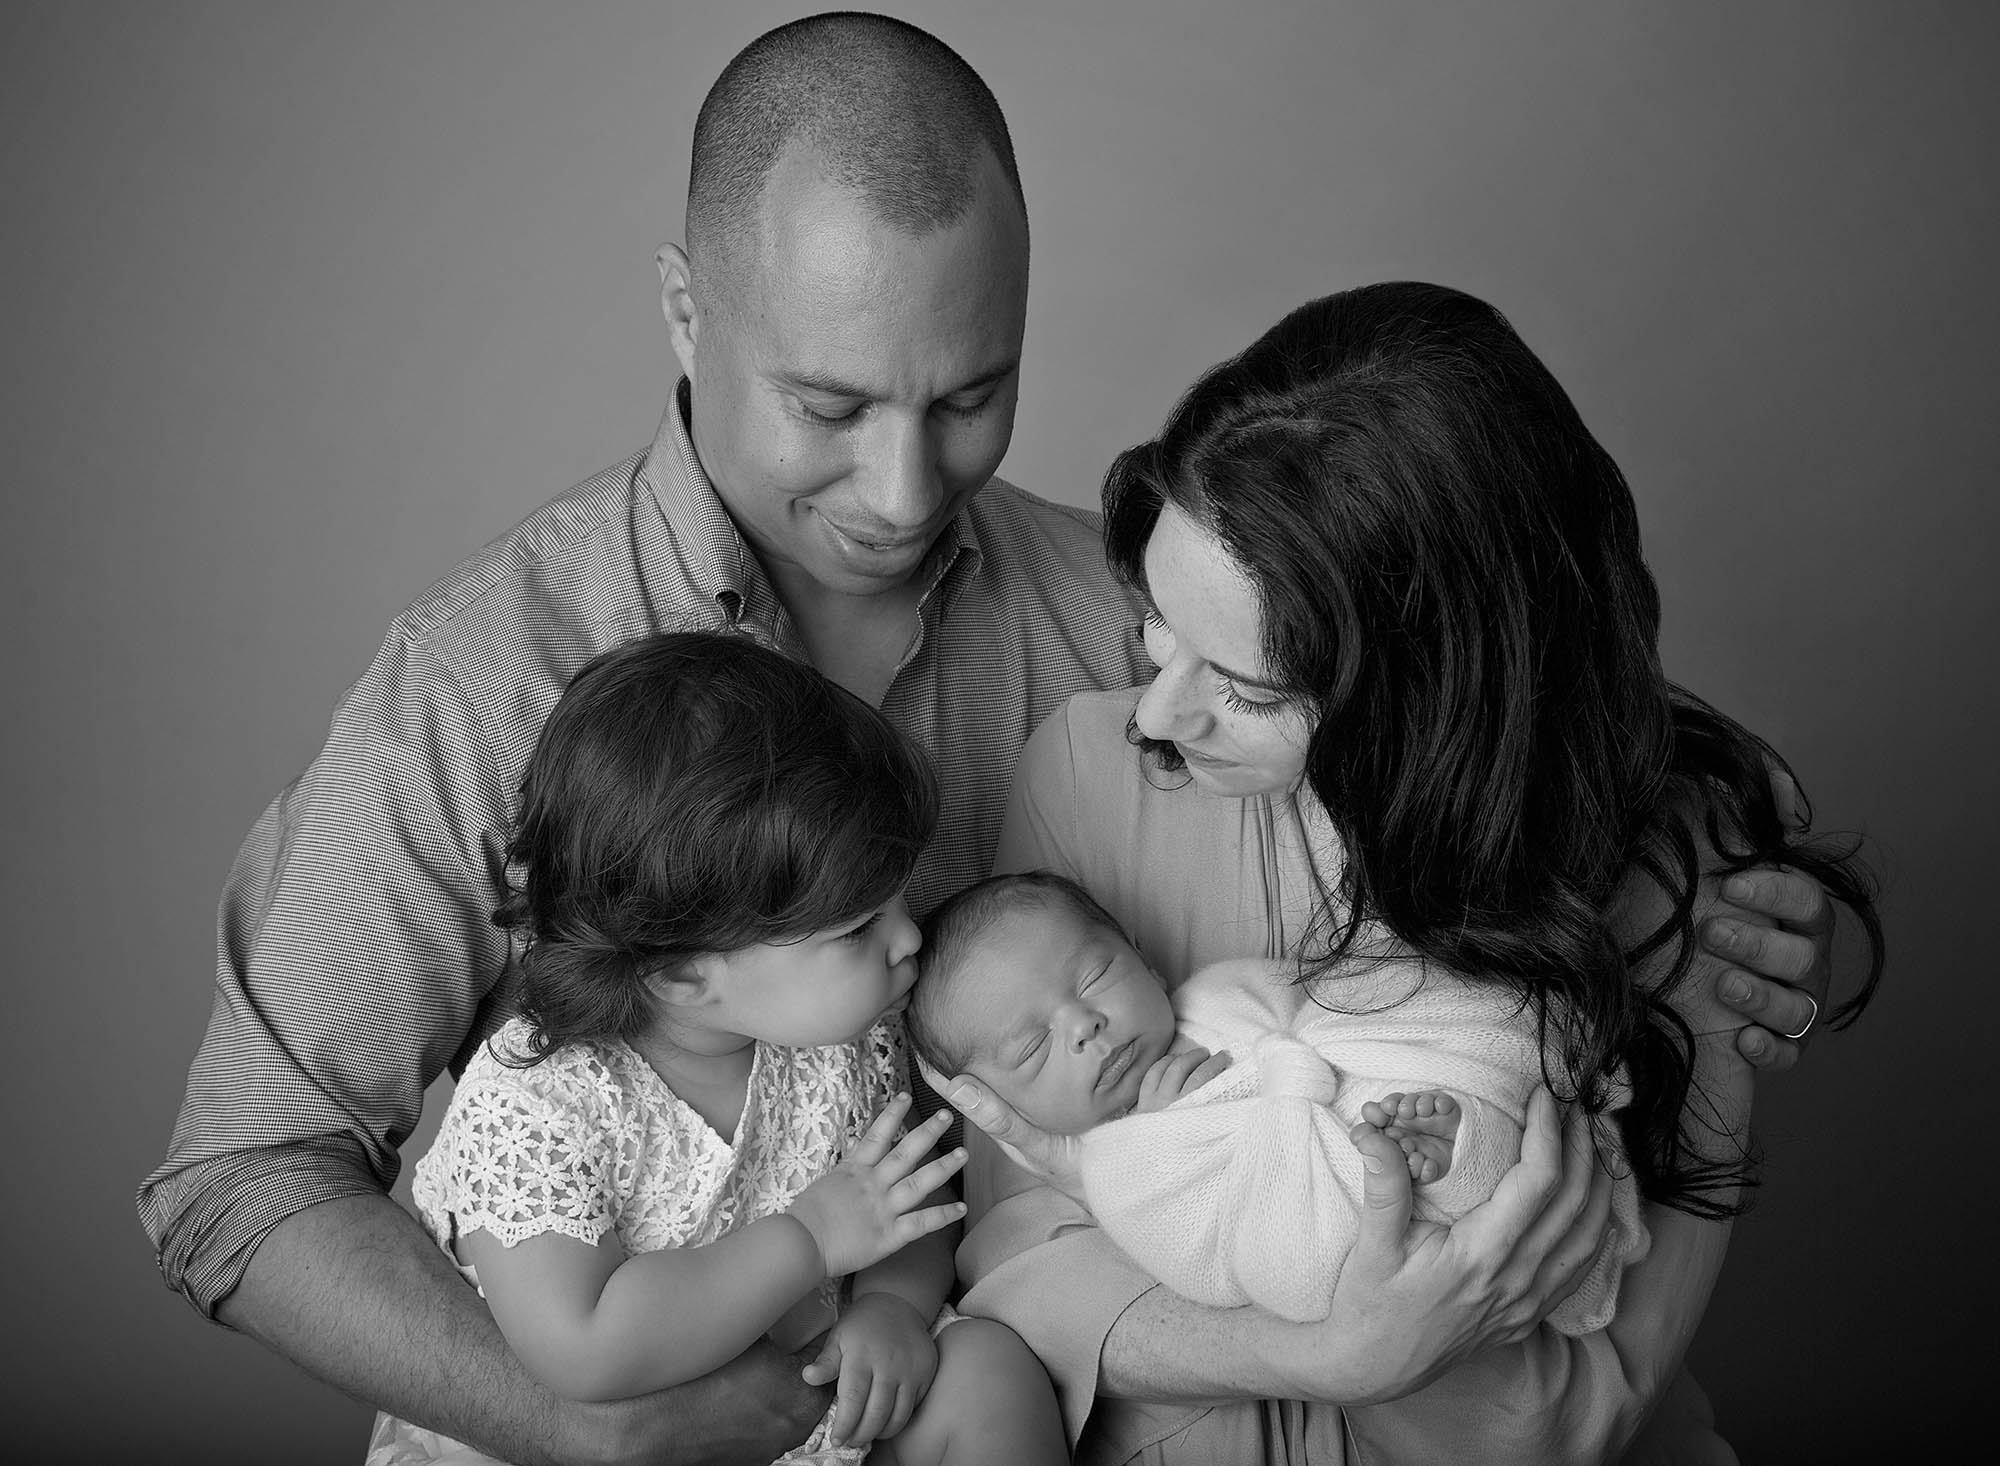 Robert Perkins, Shelley Rosenberg, and their two children. 